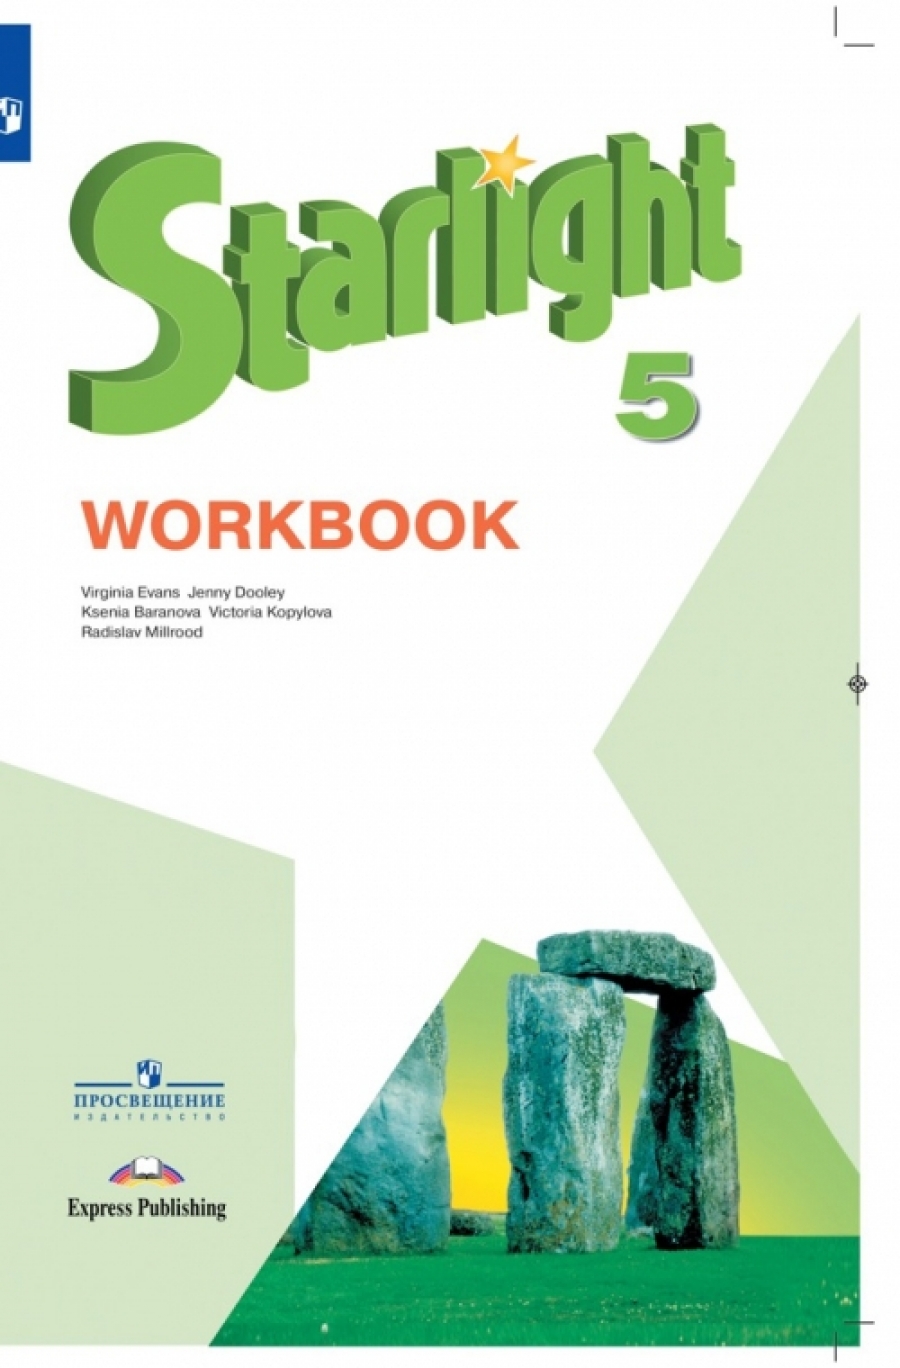  ..,  .,  ..  .   (Starlight 5).  .  . Workbook. 